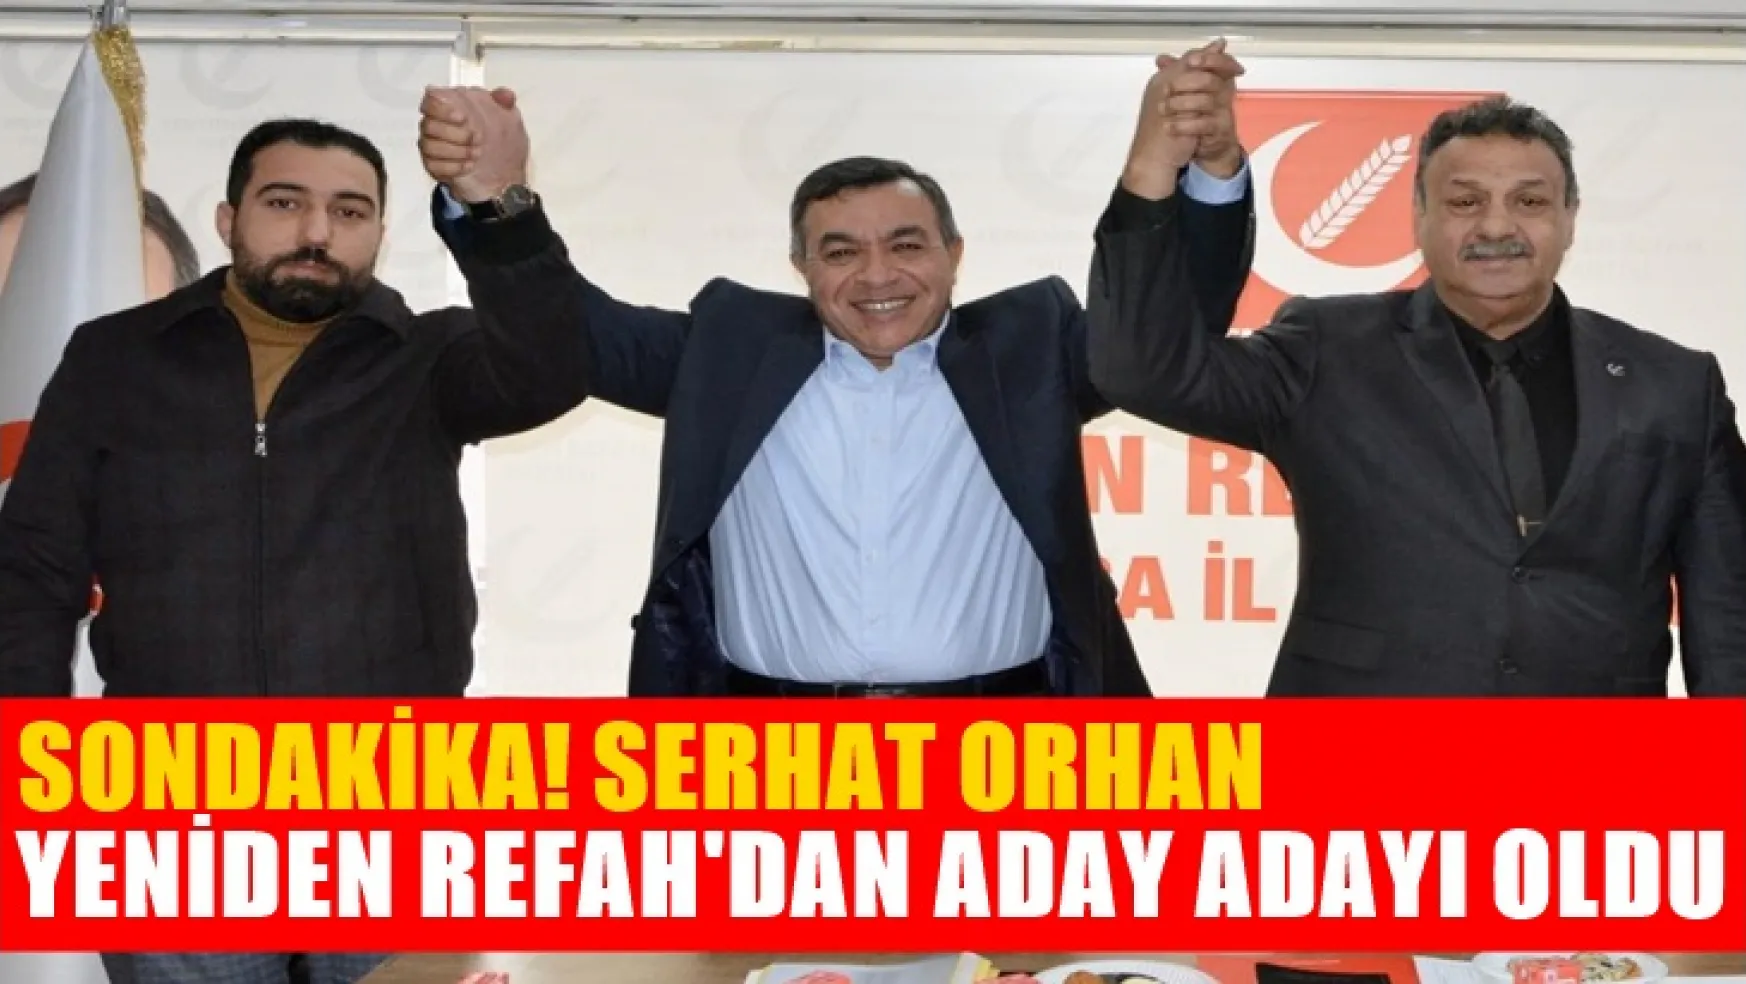 Mustafa Serhat Orhan Yeniden Refah Partisi'nden aday adayı oldu